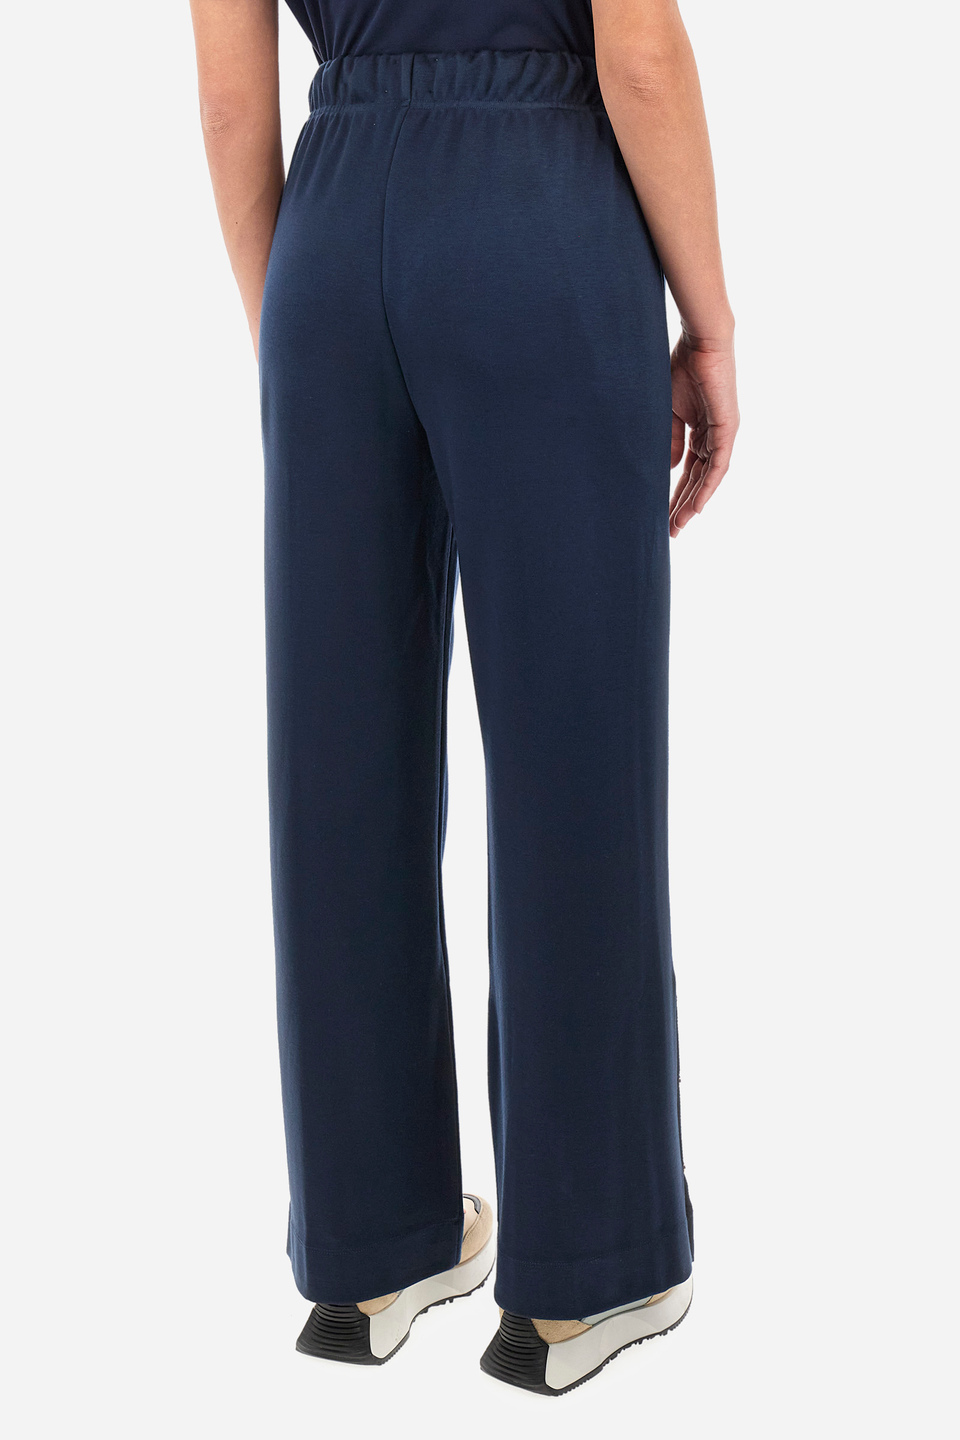 Pantaloni felpa da donna regular fit - Yamila | La Martina - Official Online Shop